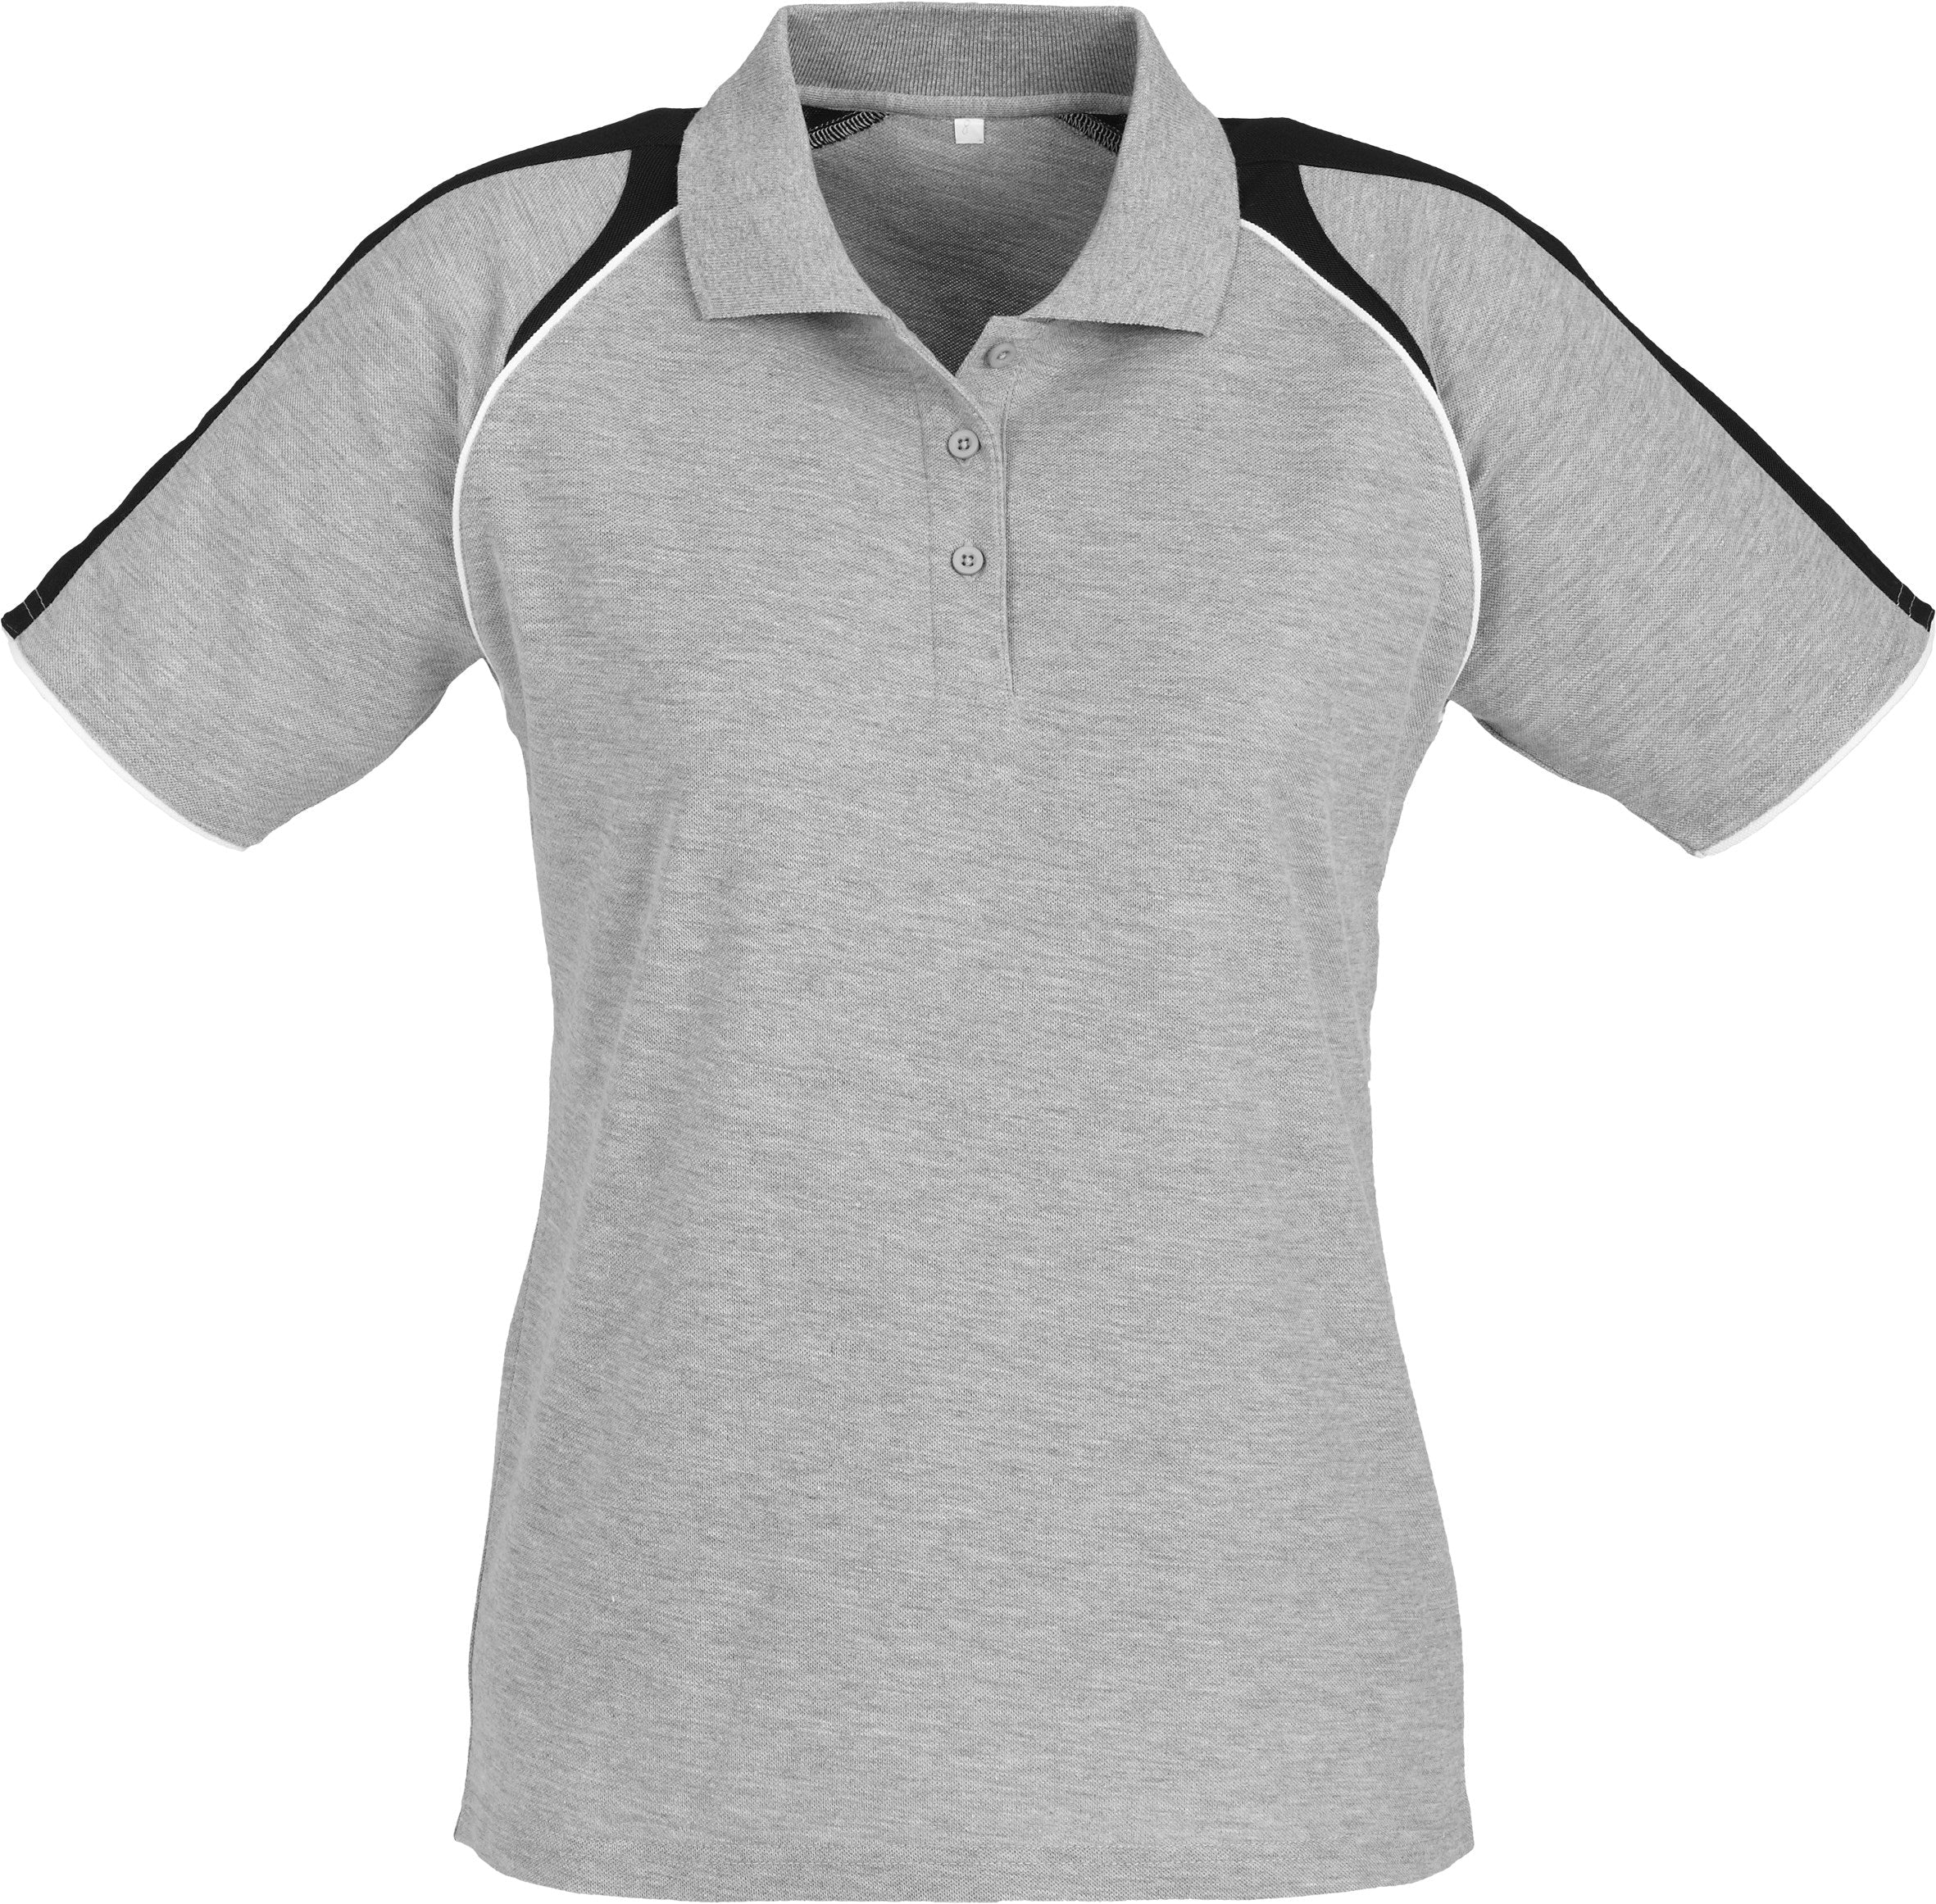 Ladies Triton Golf Shirt - Black Yellow Only-L-Grey-GY